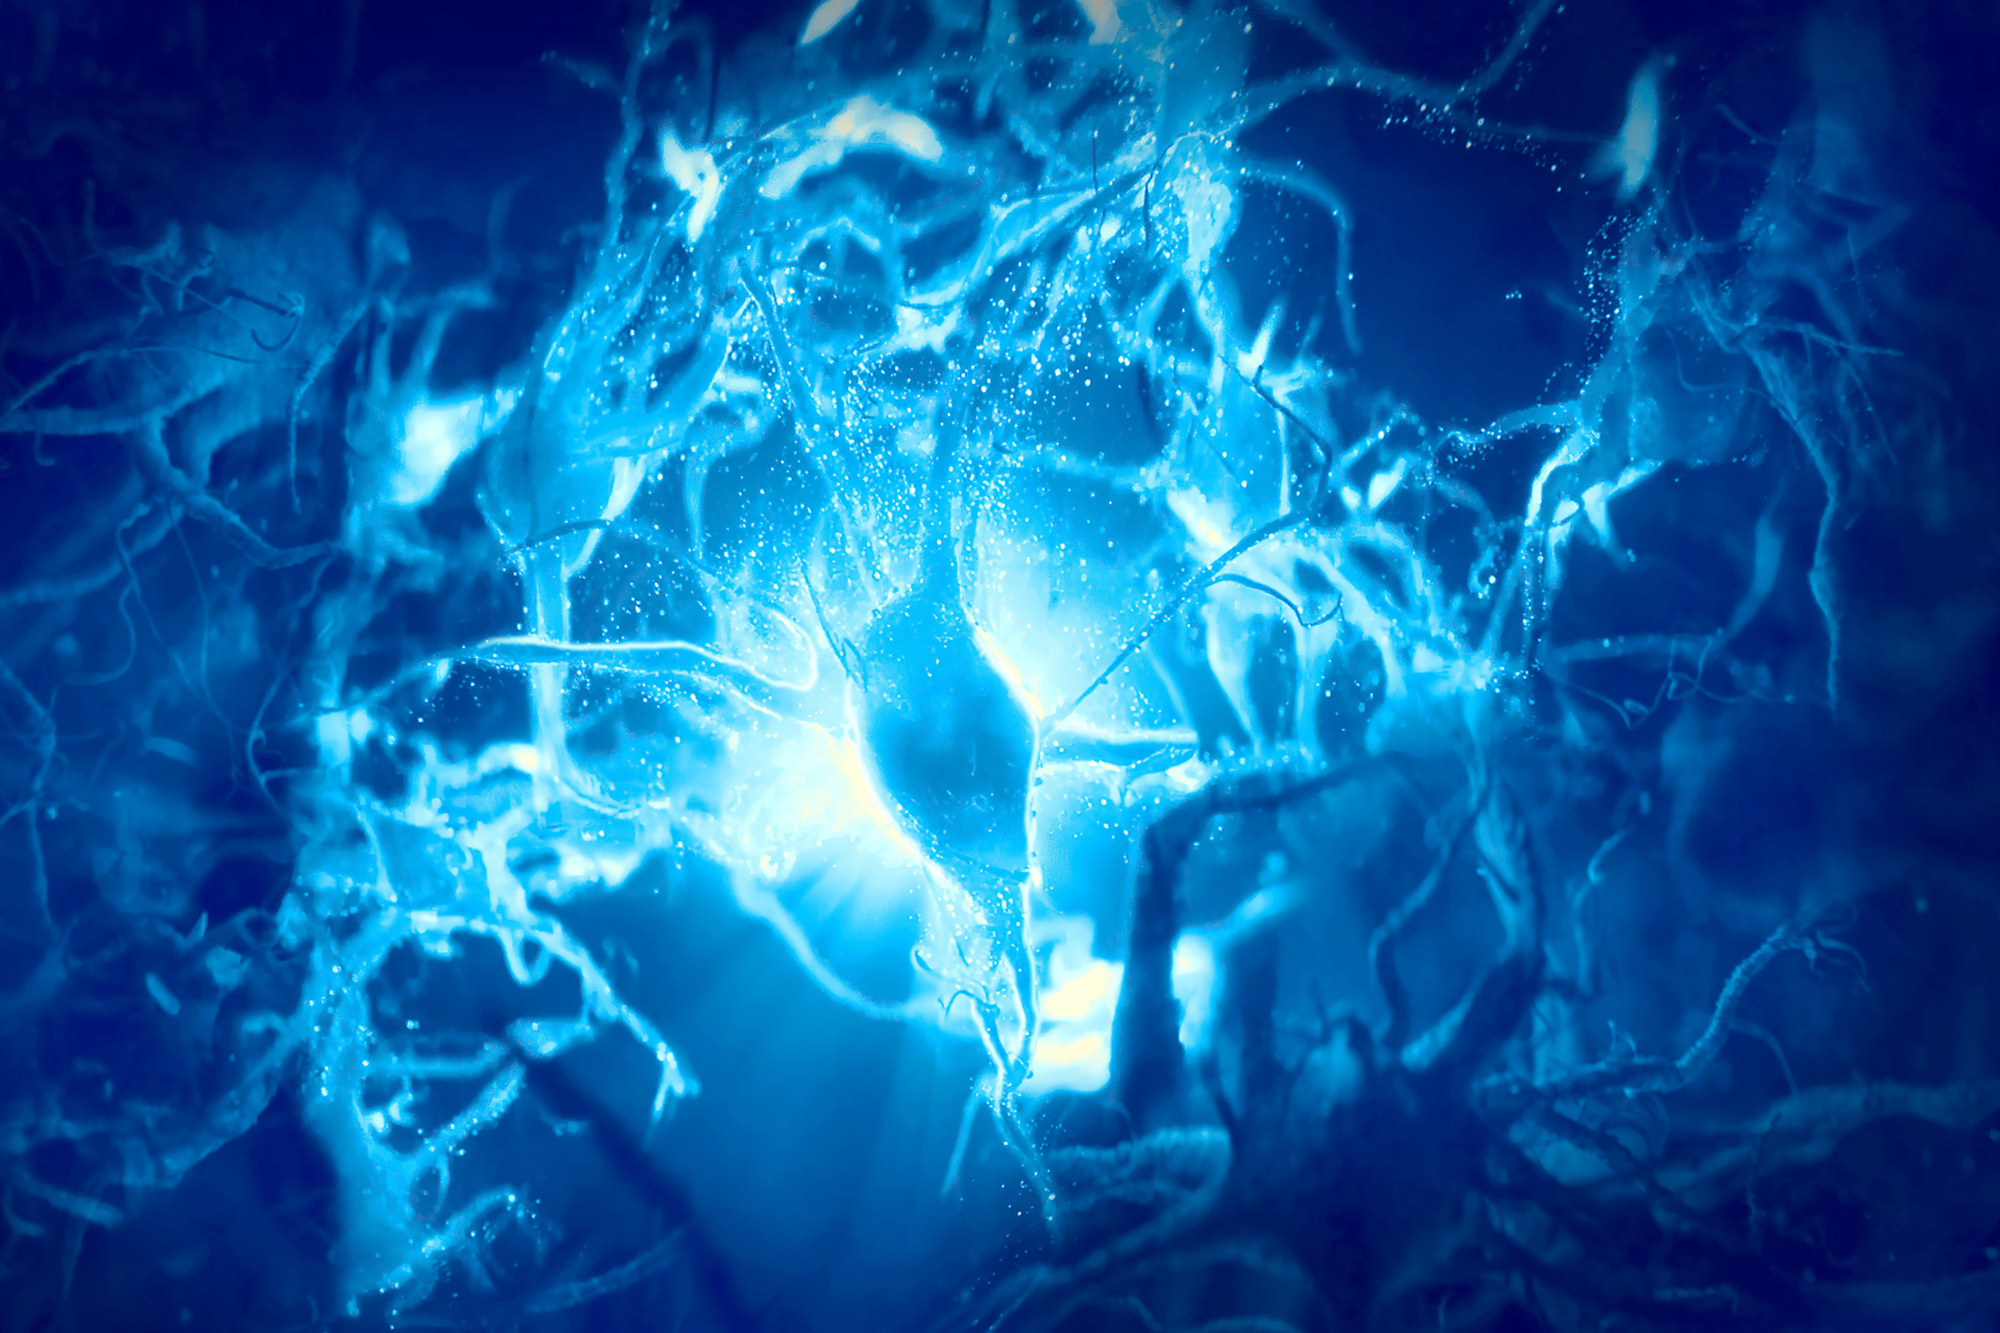 Microscopic view of illuminated brain neurons.